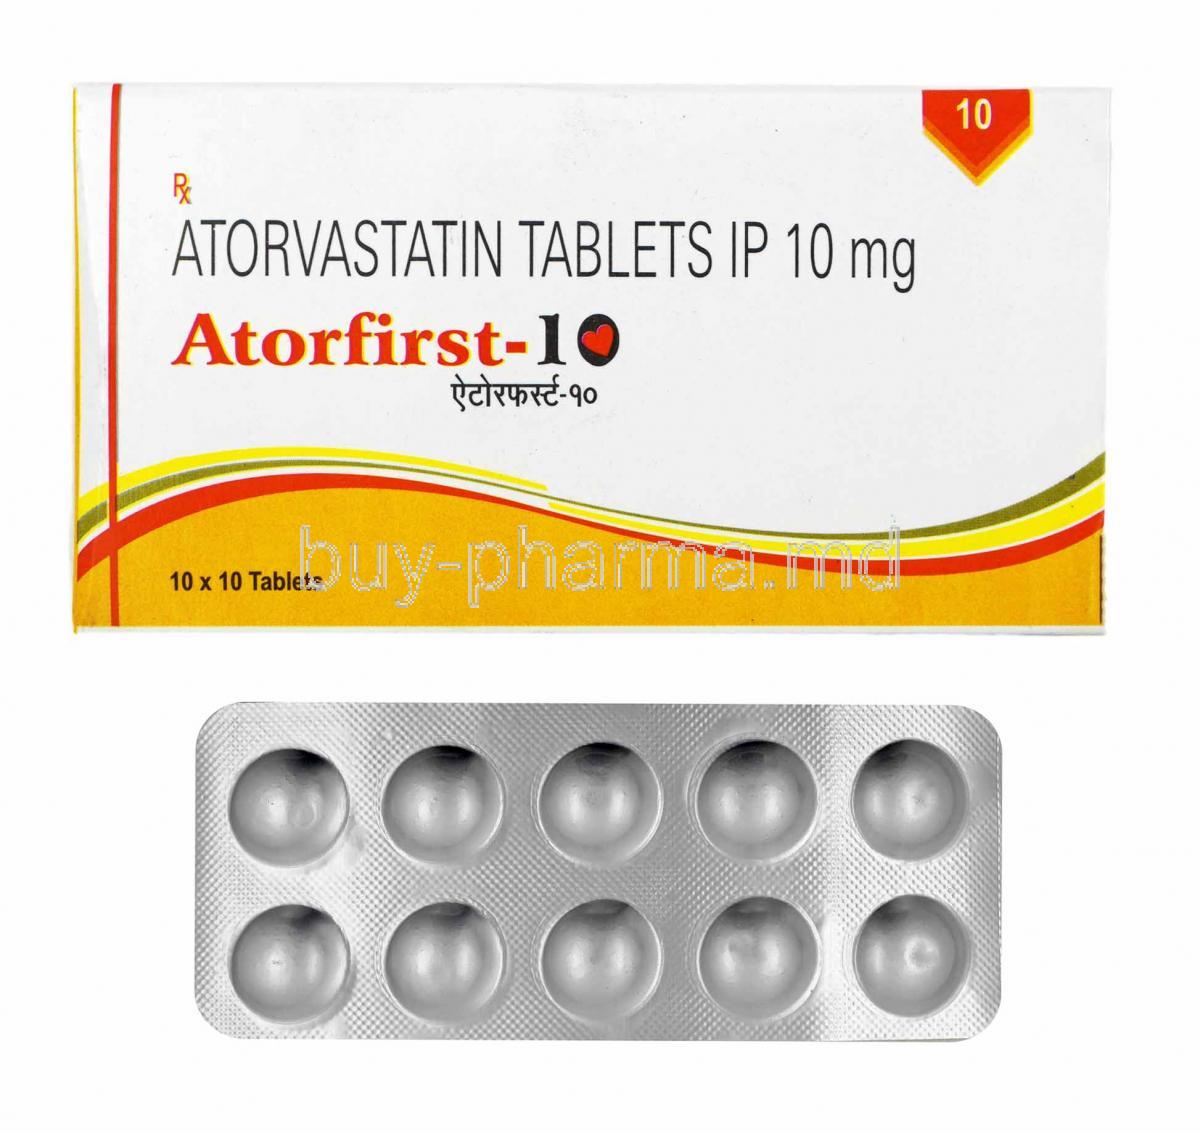 Atorfirst, Atorvastatin 10mg box and tablets